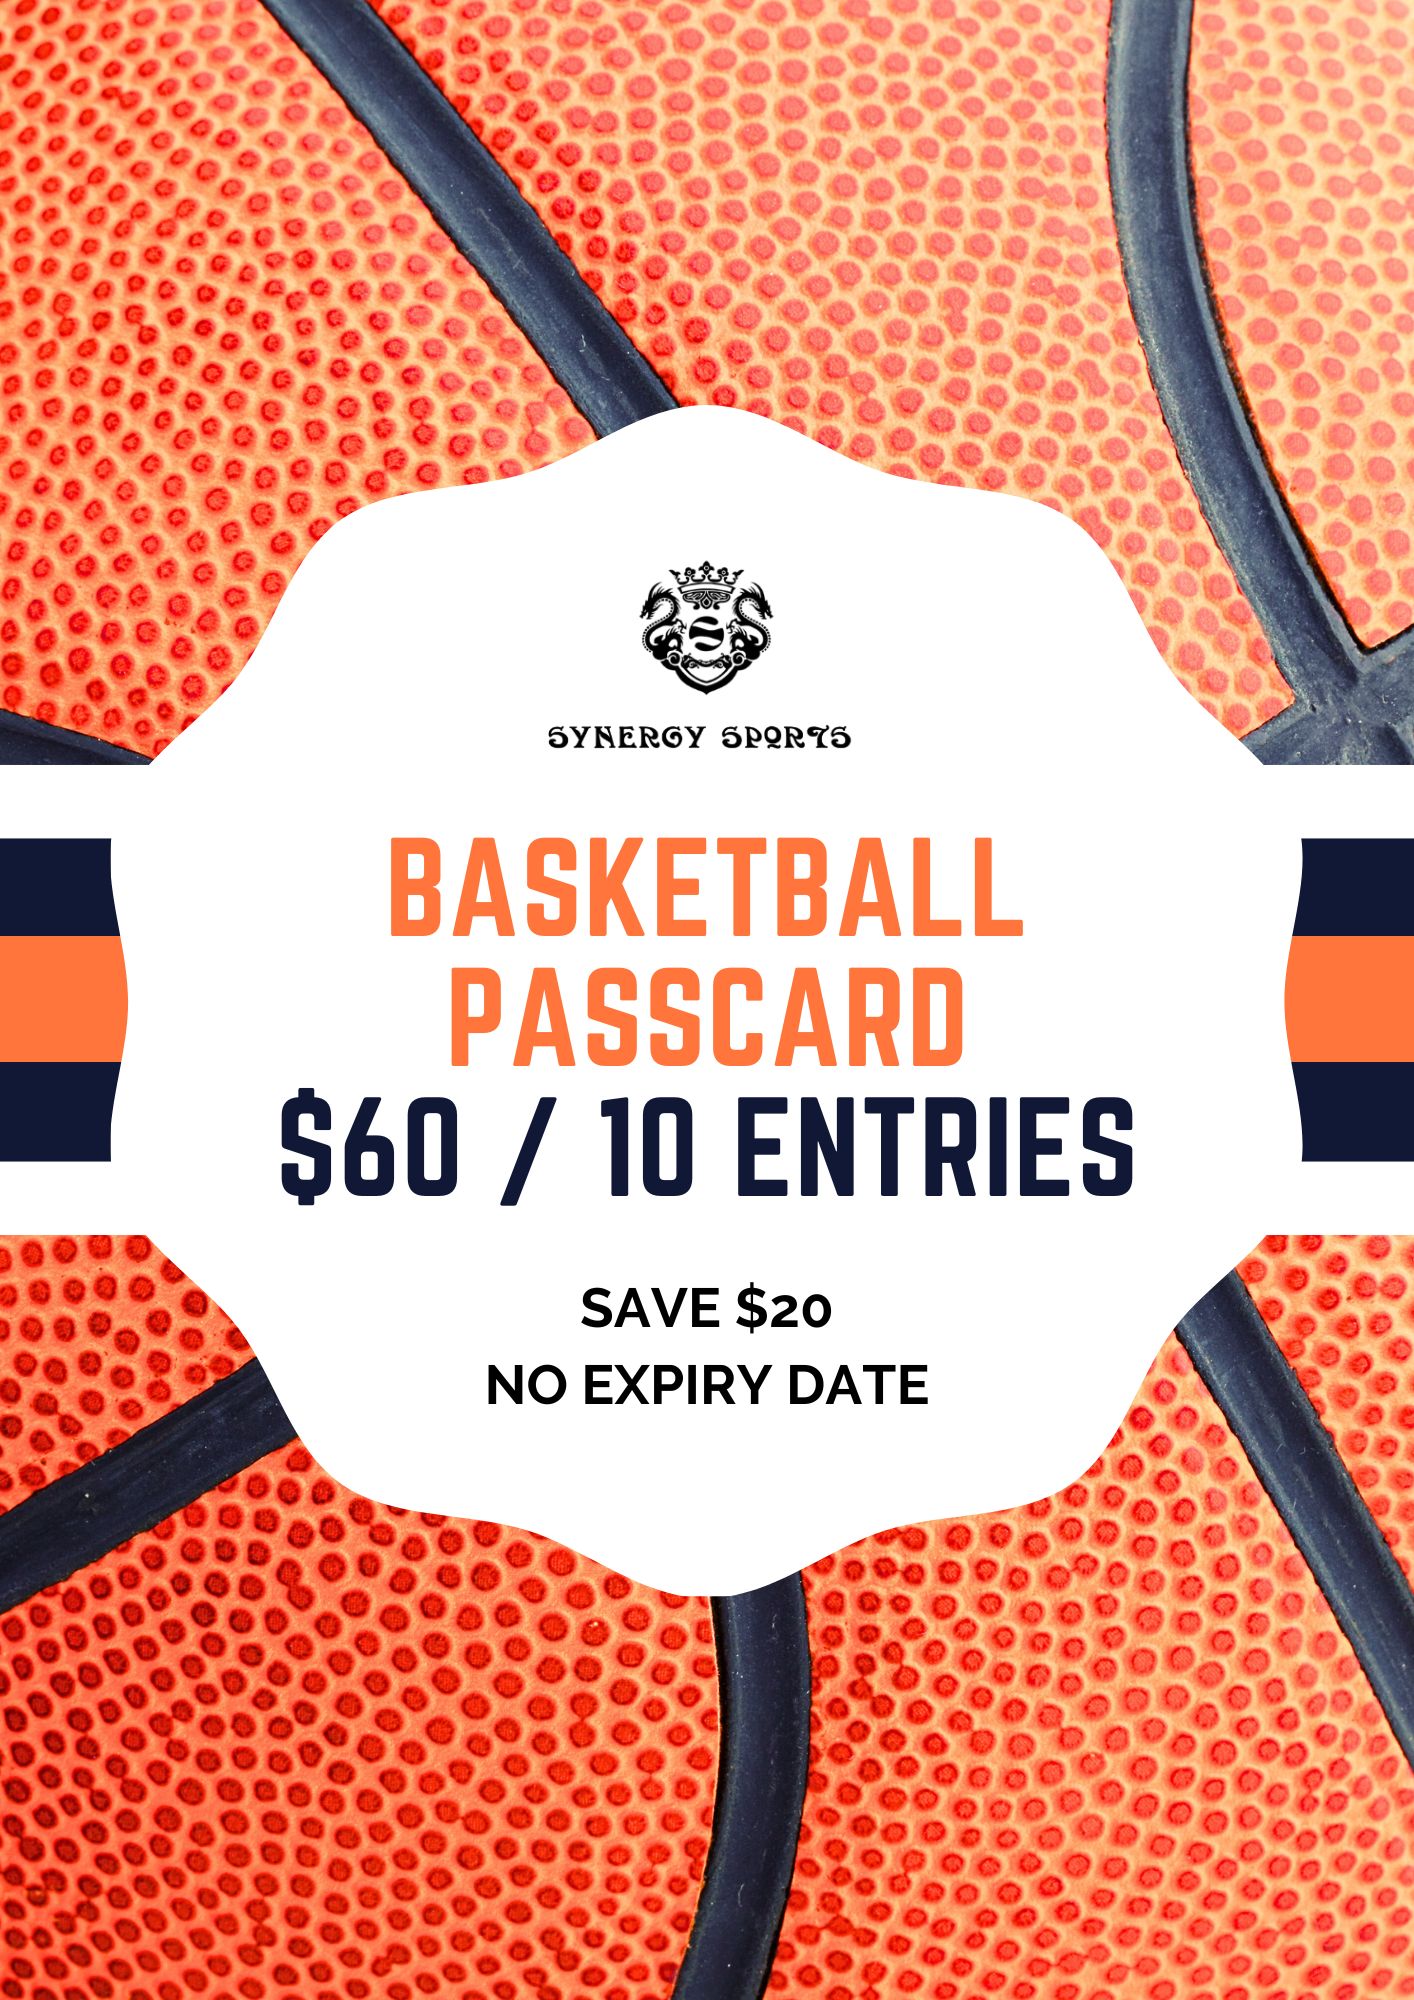 Basketball passcard